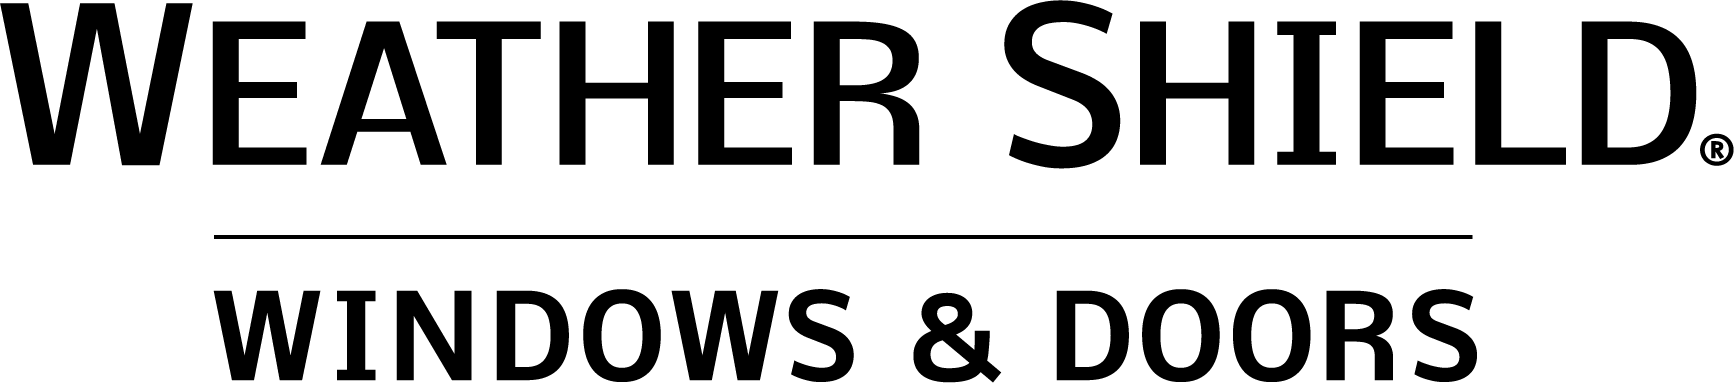 Weathershield logo